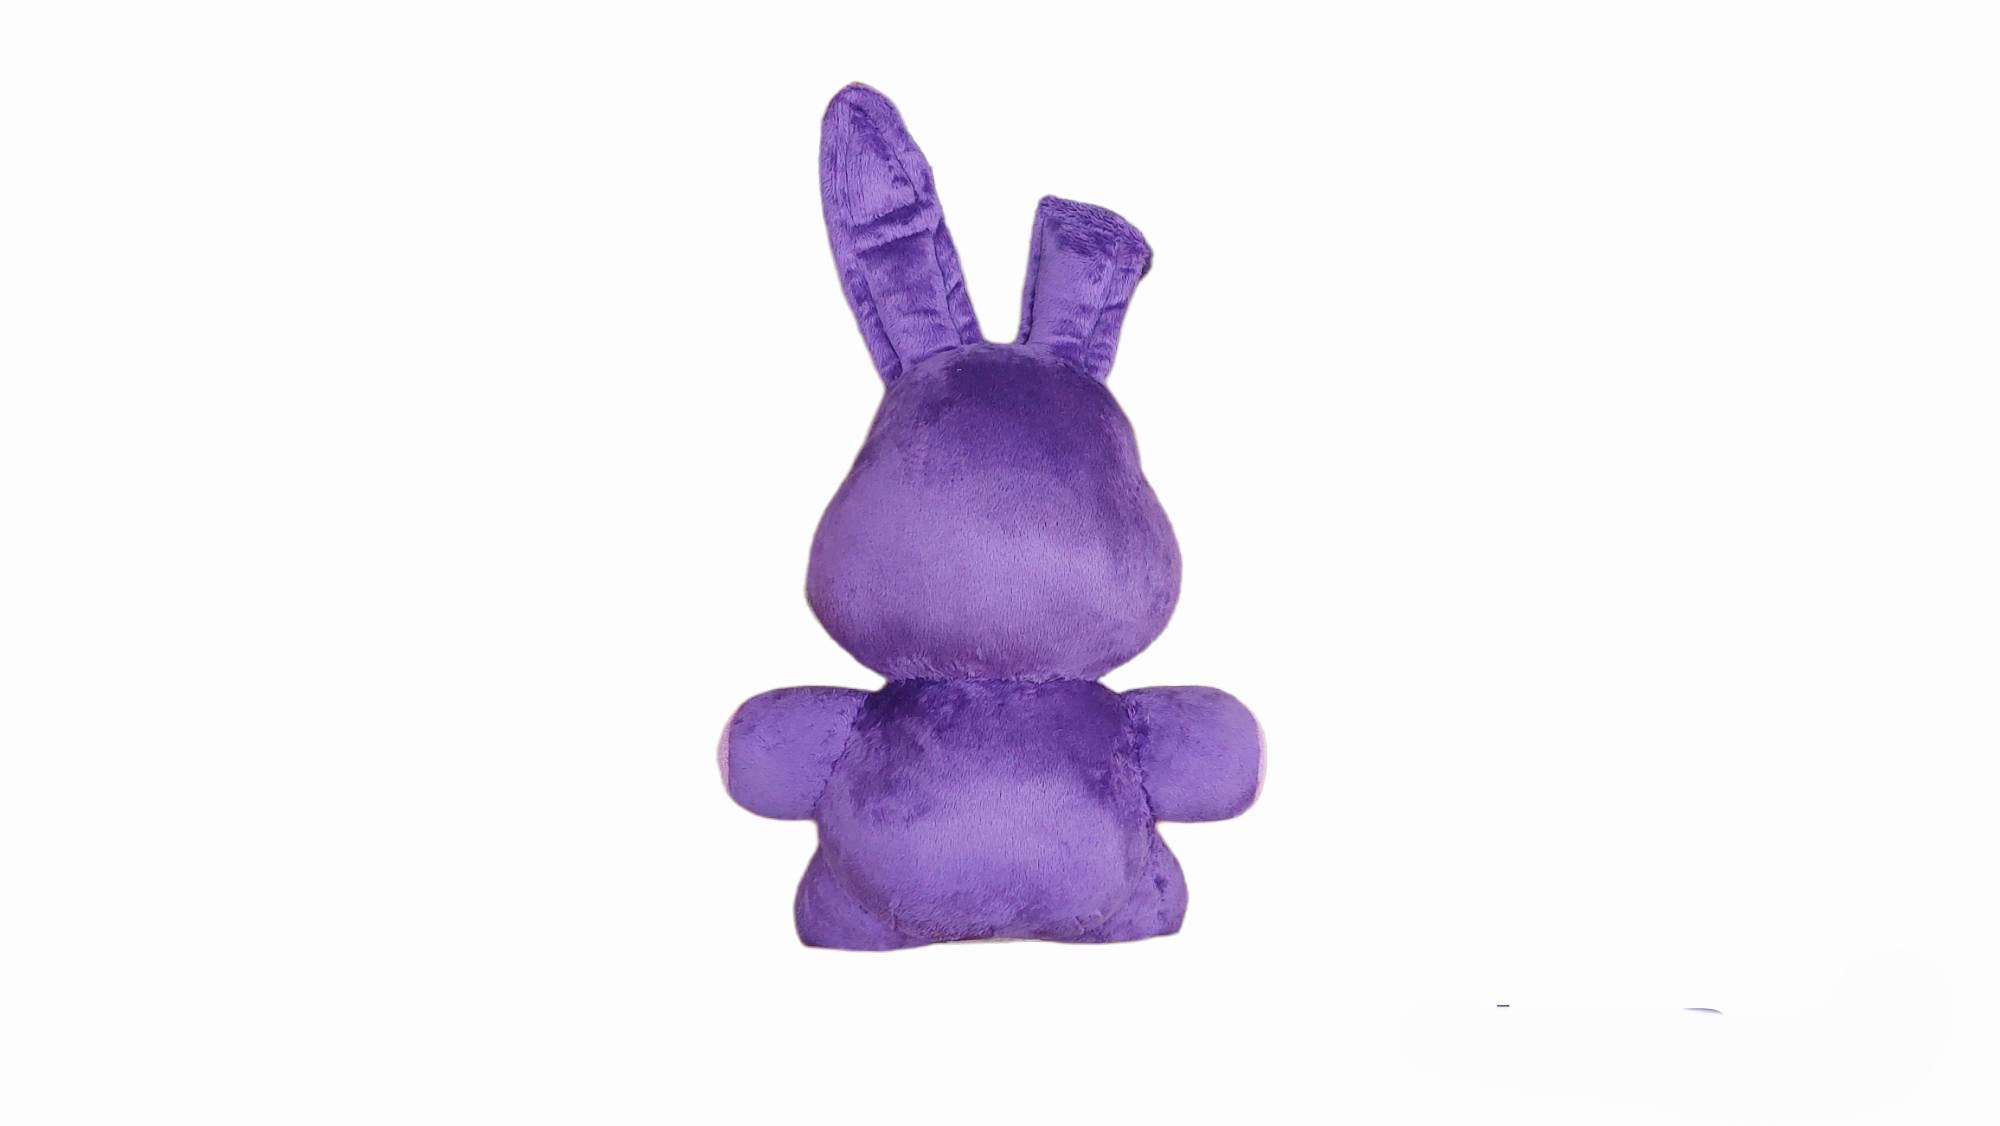 Five Nights At Freddy's Plush, Bonnie Plush Cute Purple Rabbit Toy